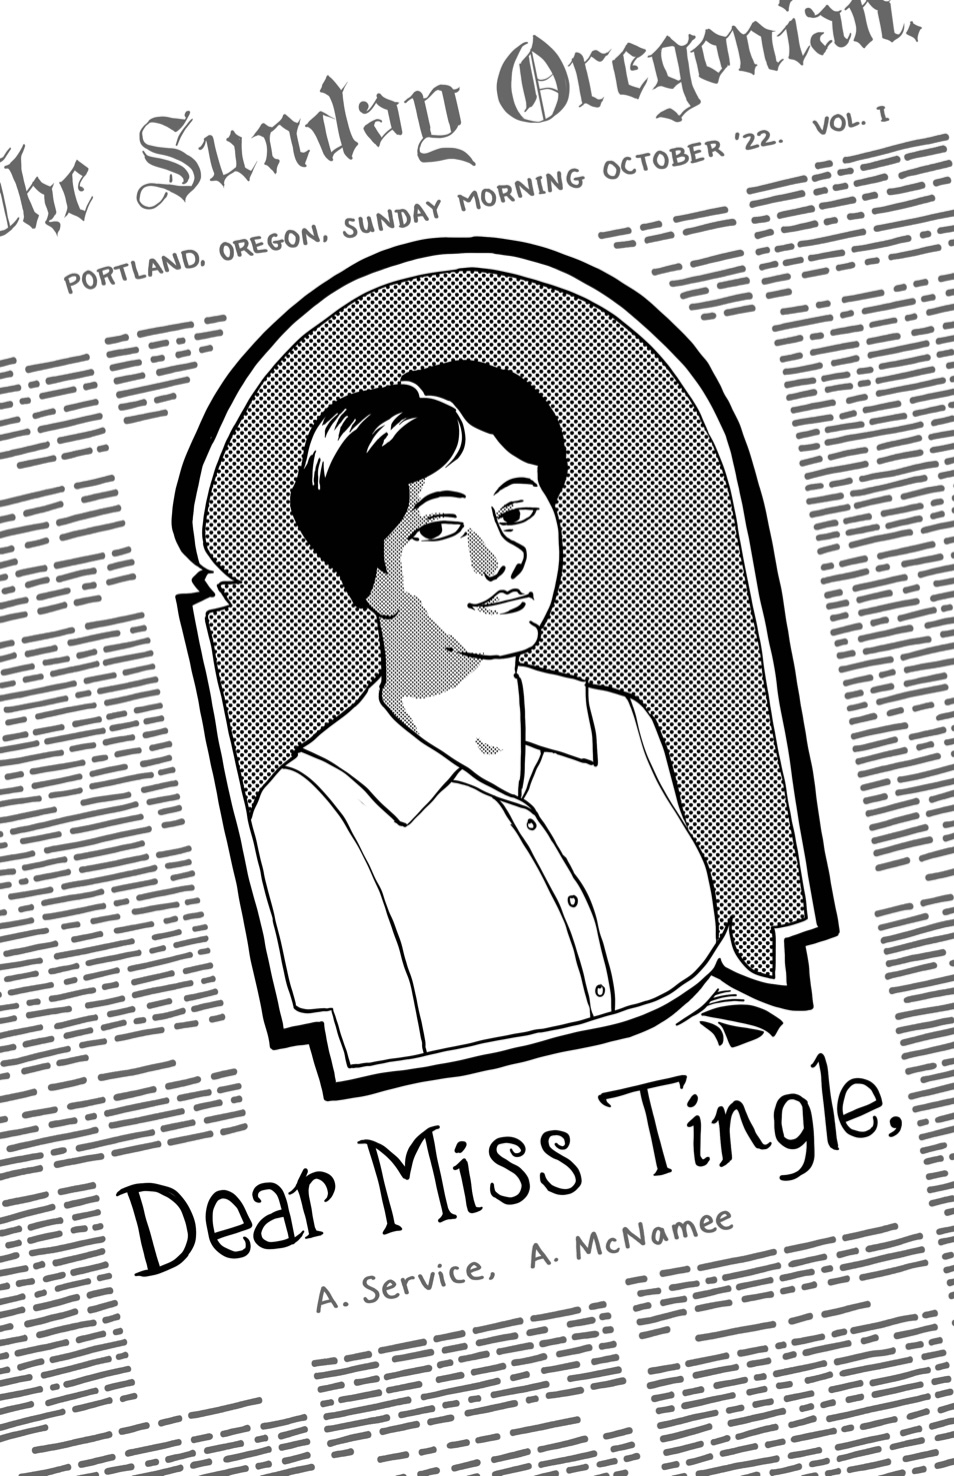 Dear Miss Tingle